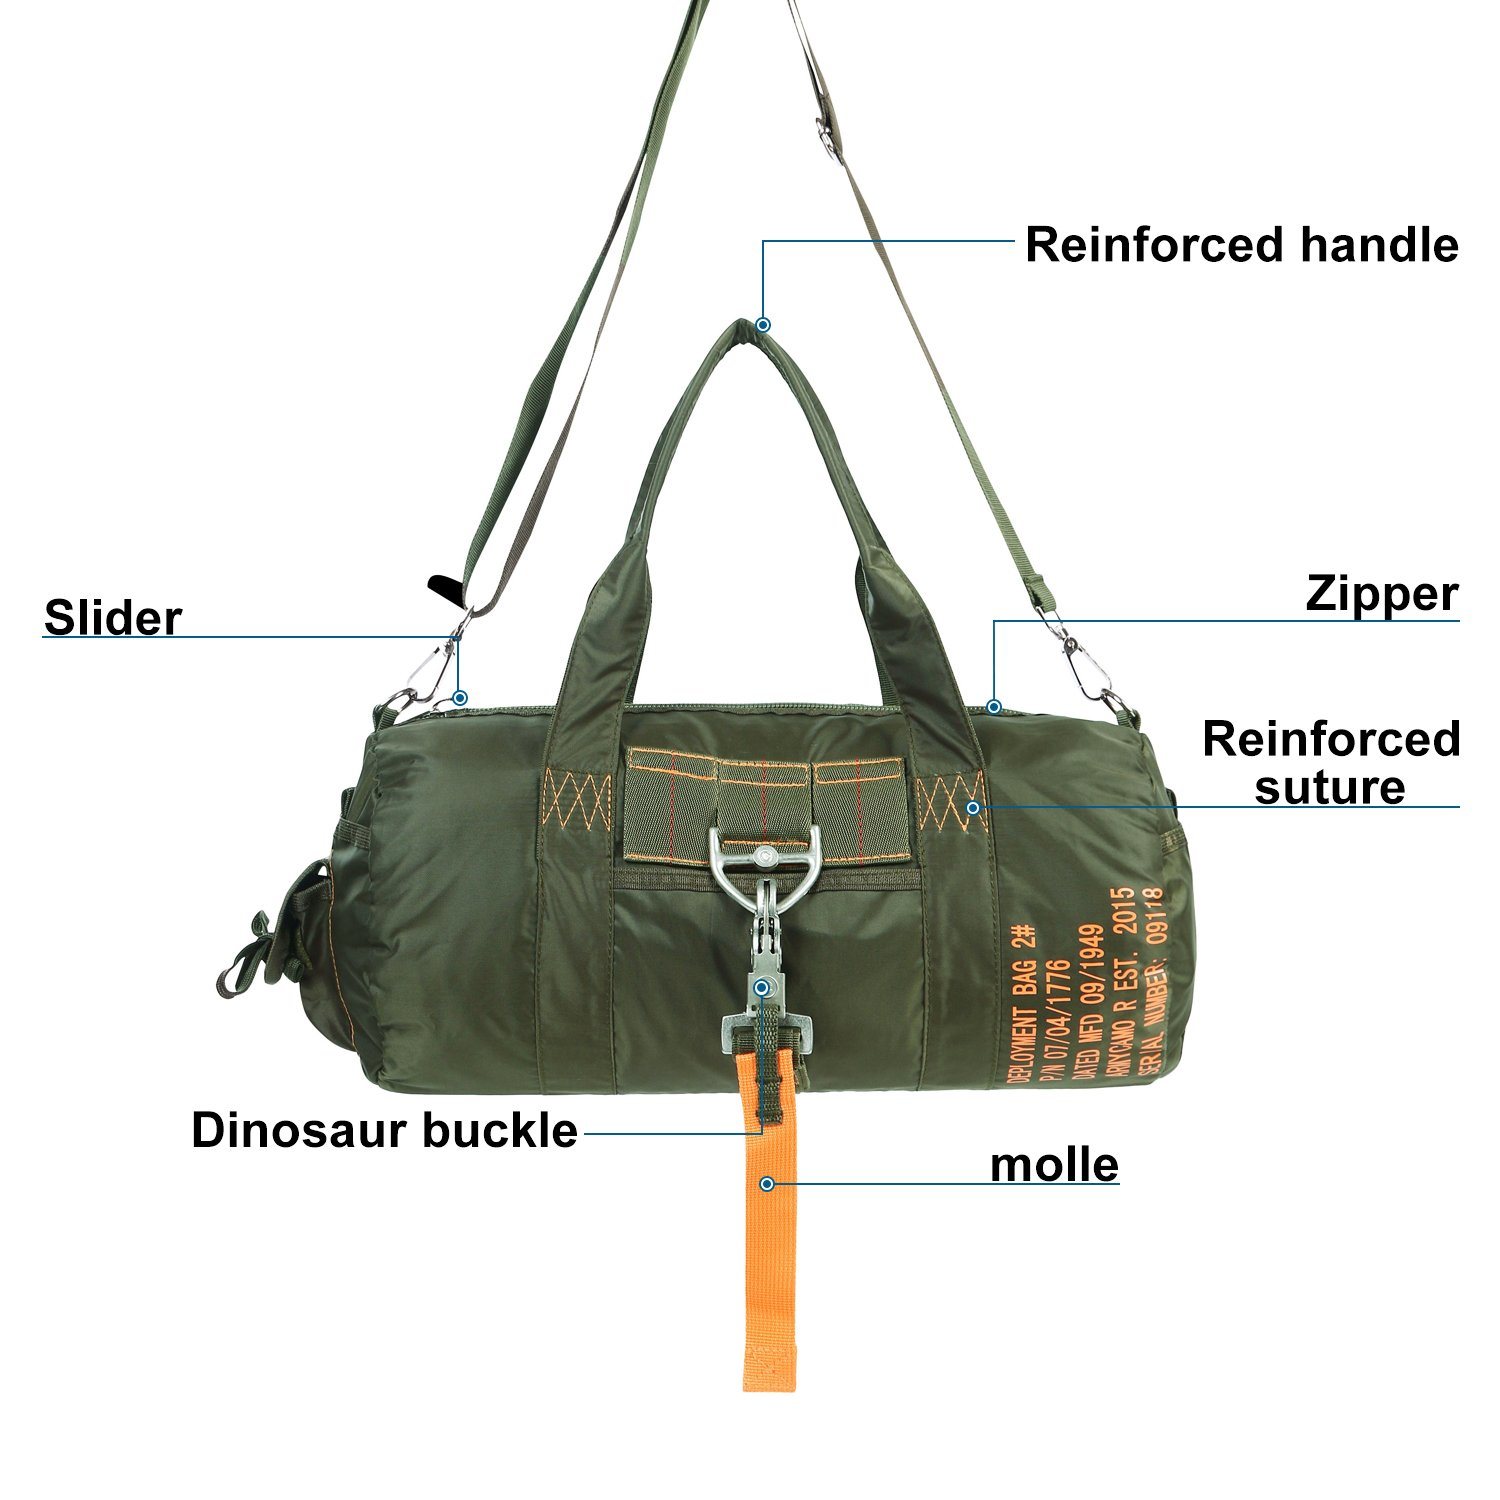 Hot Selling Military Portable Flight Shoulder Bag Parachute Backpack